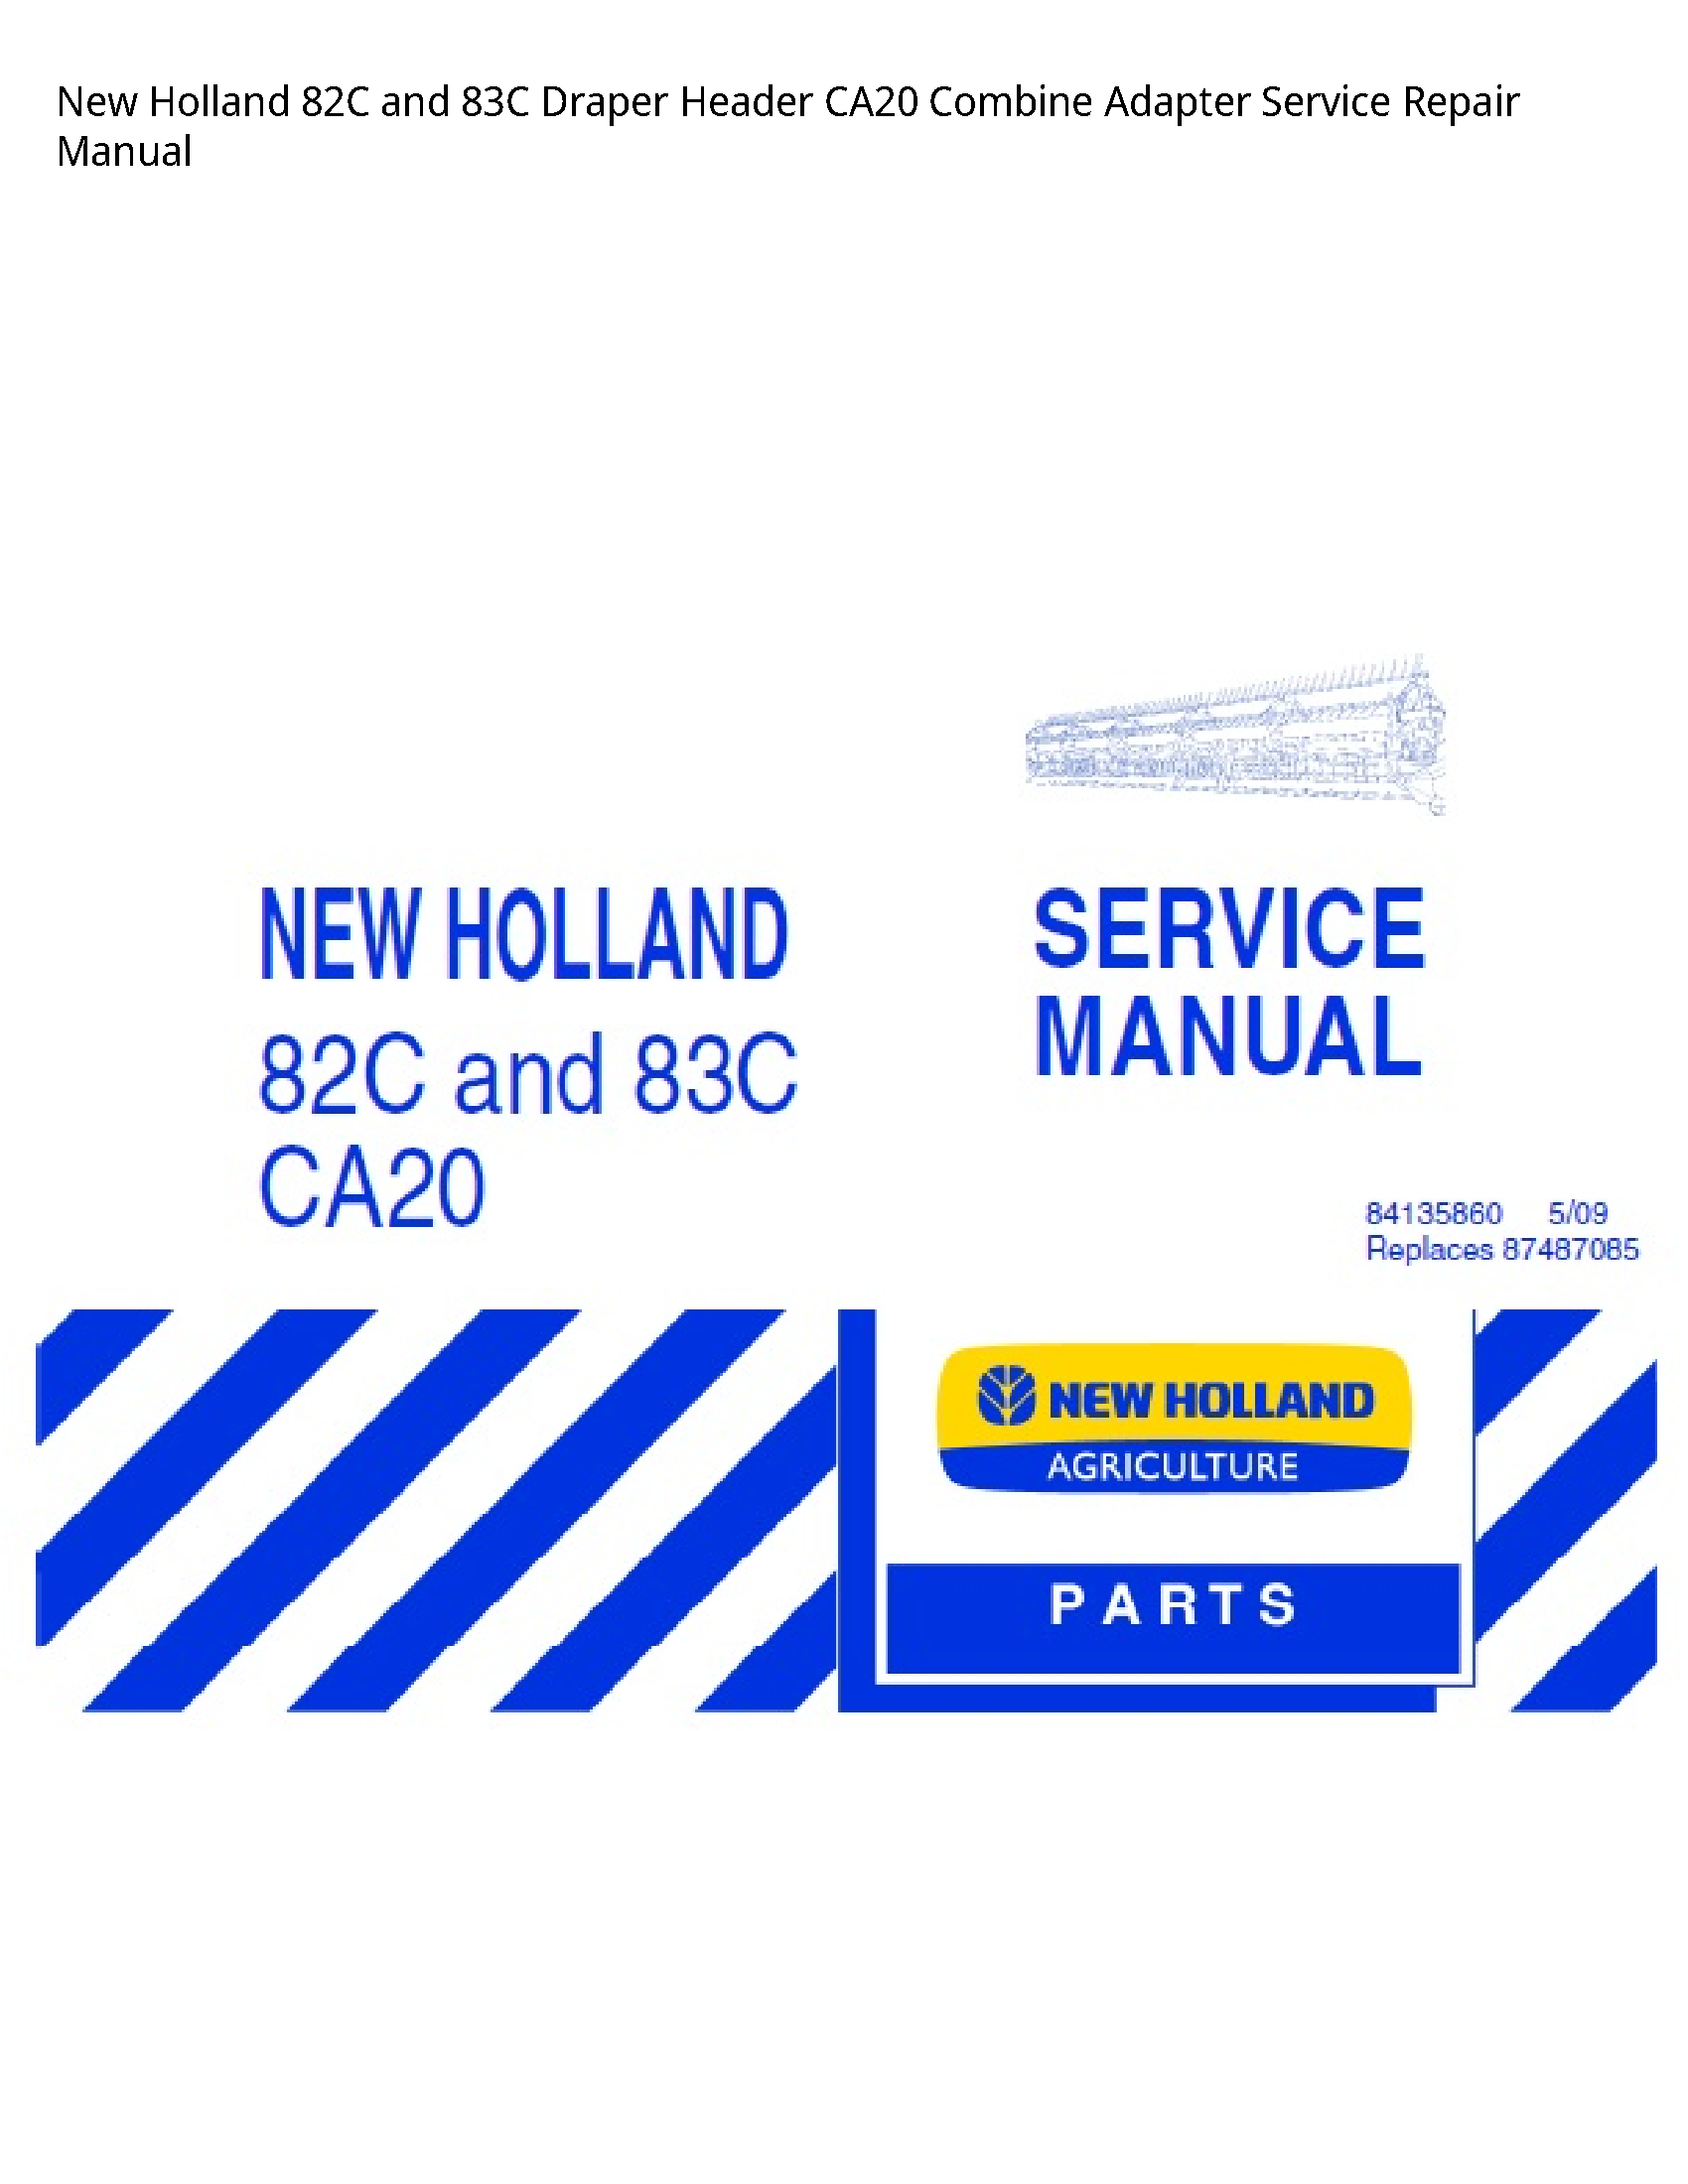 New Holland 82C  Draper Header Combine Adapter manual